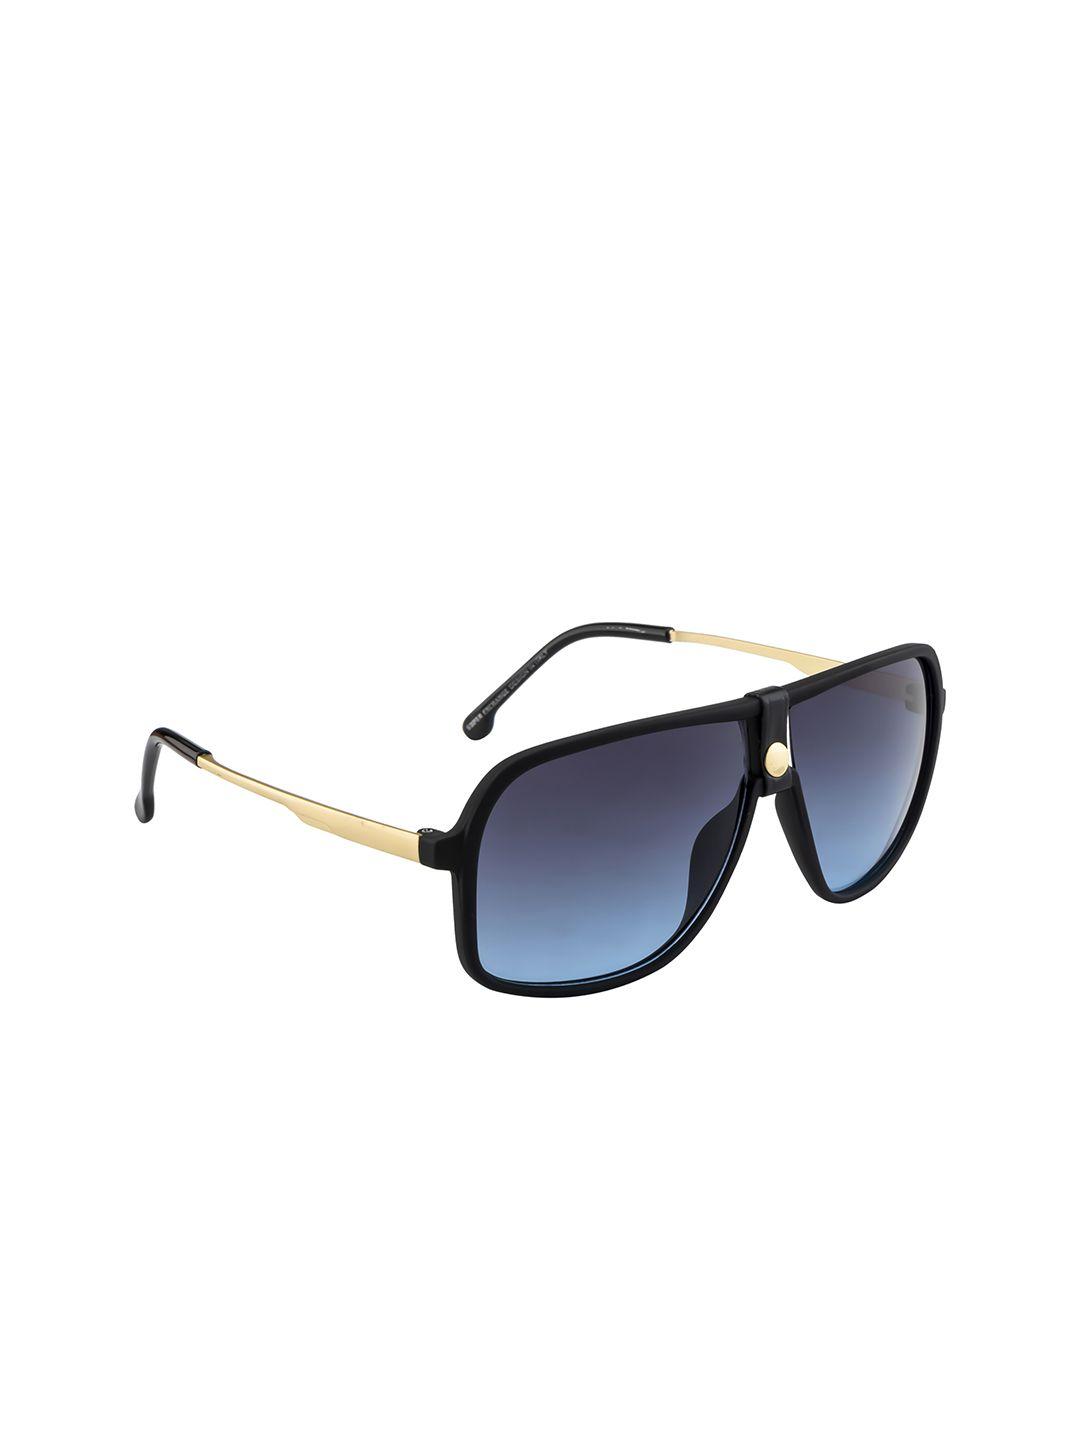 mast-&-harbour-full-rim-square-sunglasses-with-uv-protected-lens-mh-m25108